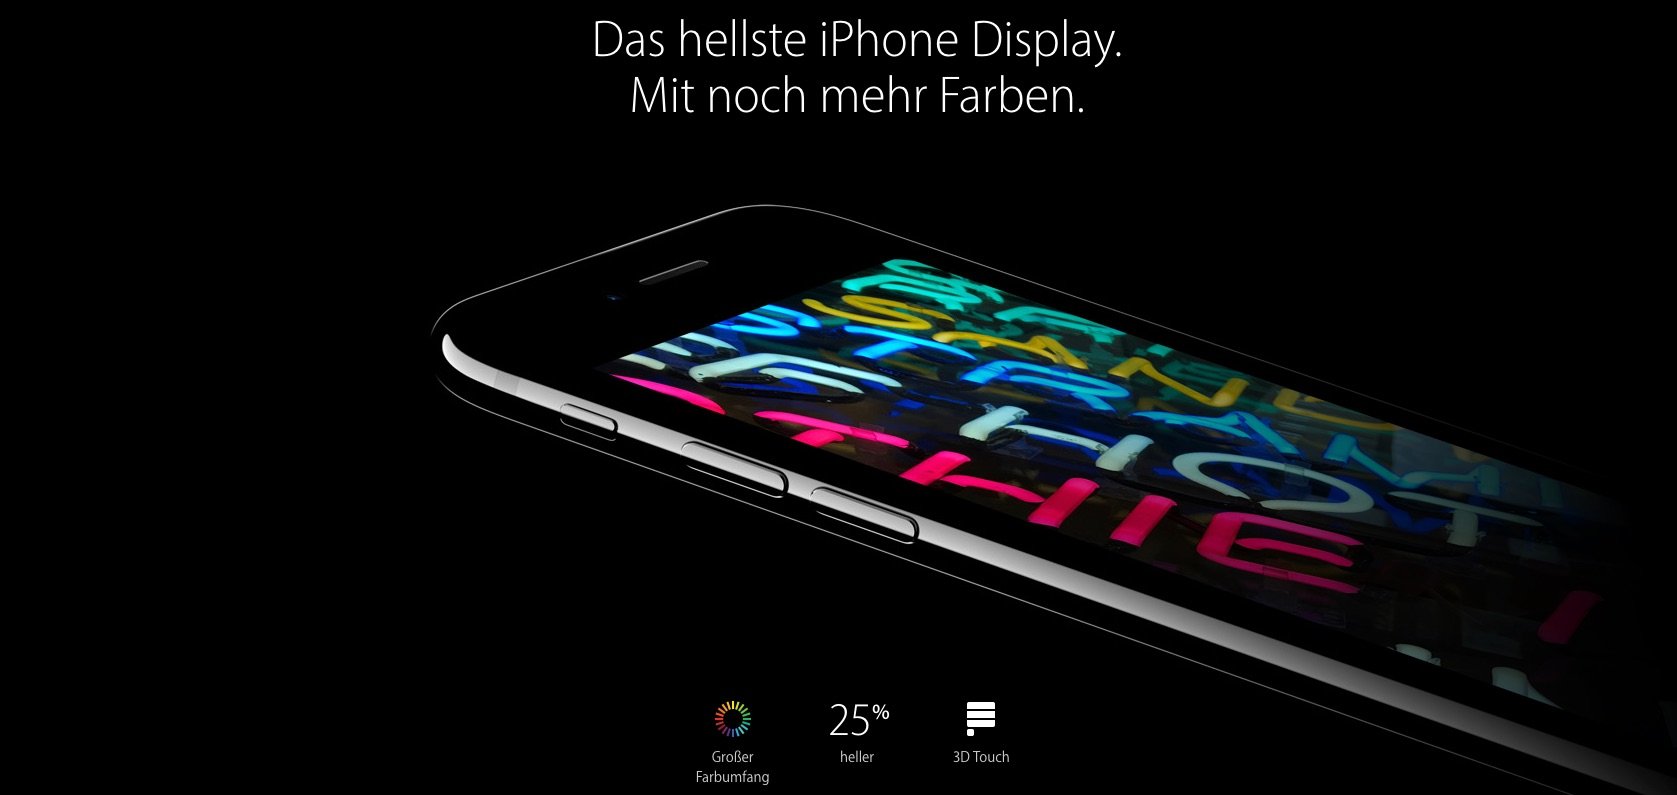 iPhone 7 im Display-Test: iPhone 7 bricht Smartphone Display Rekorde 2